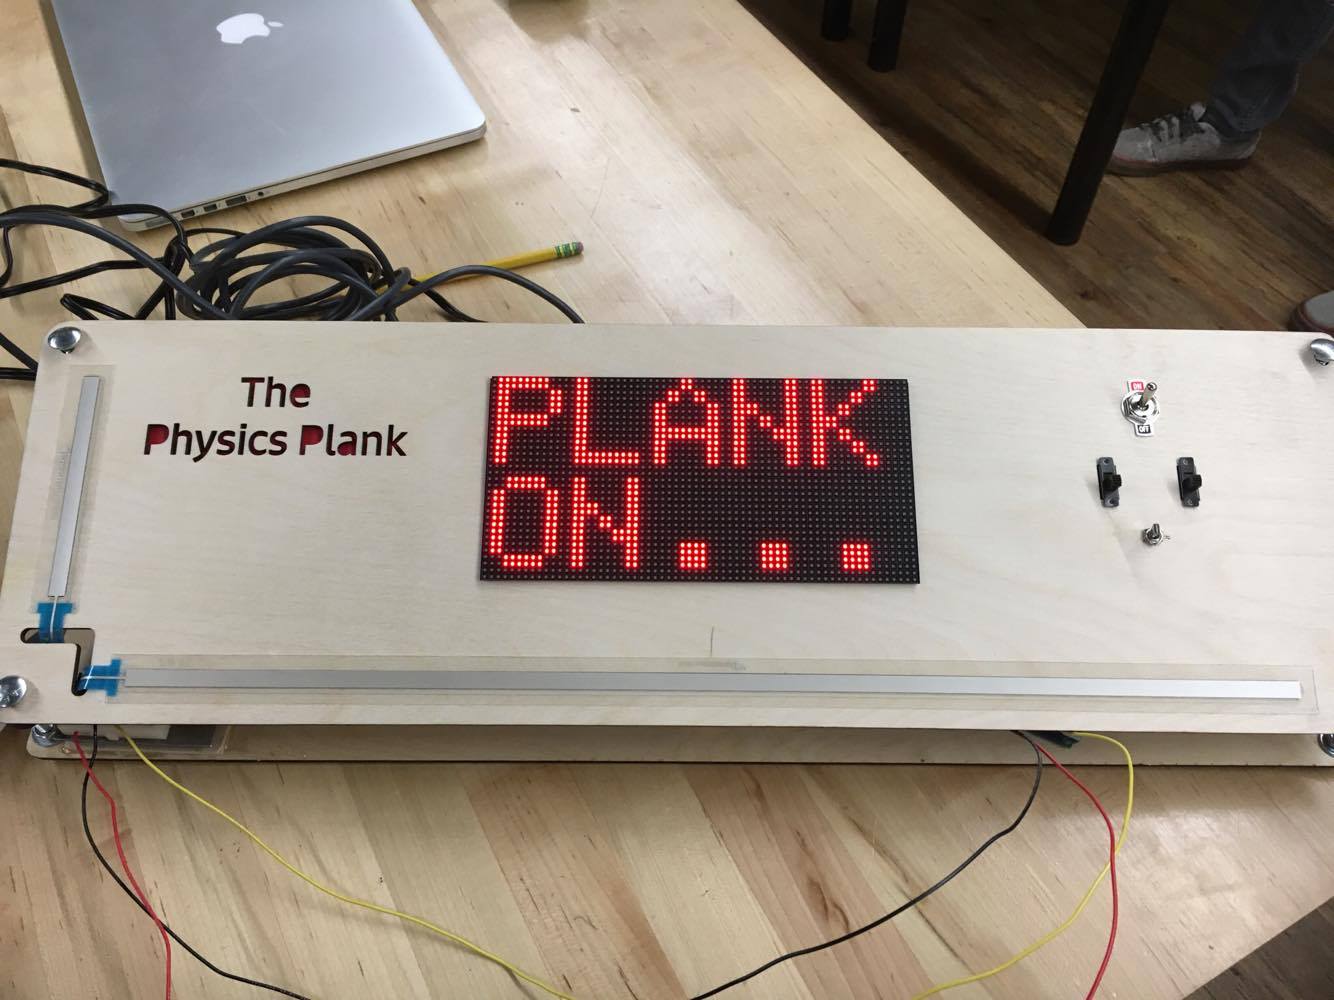 The Physics Plank